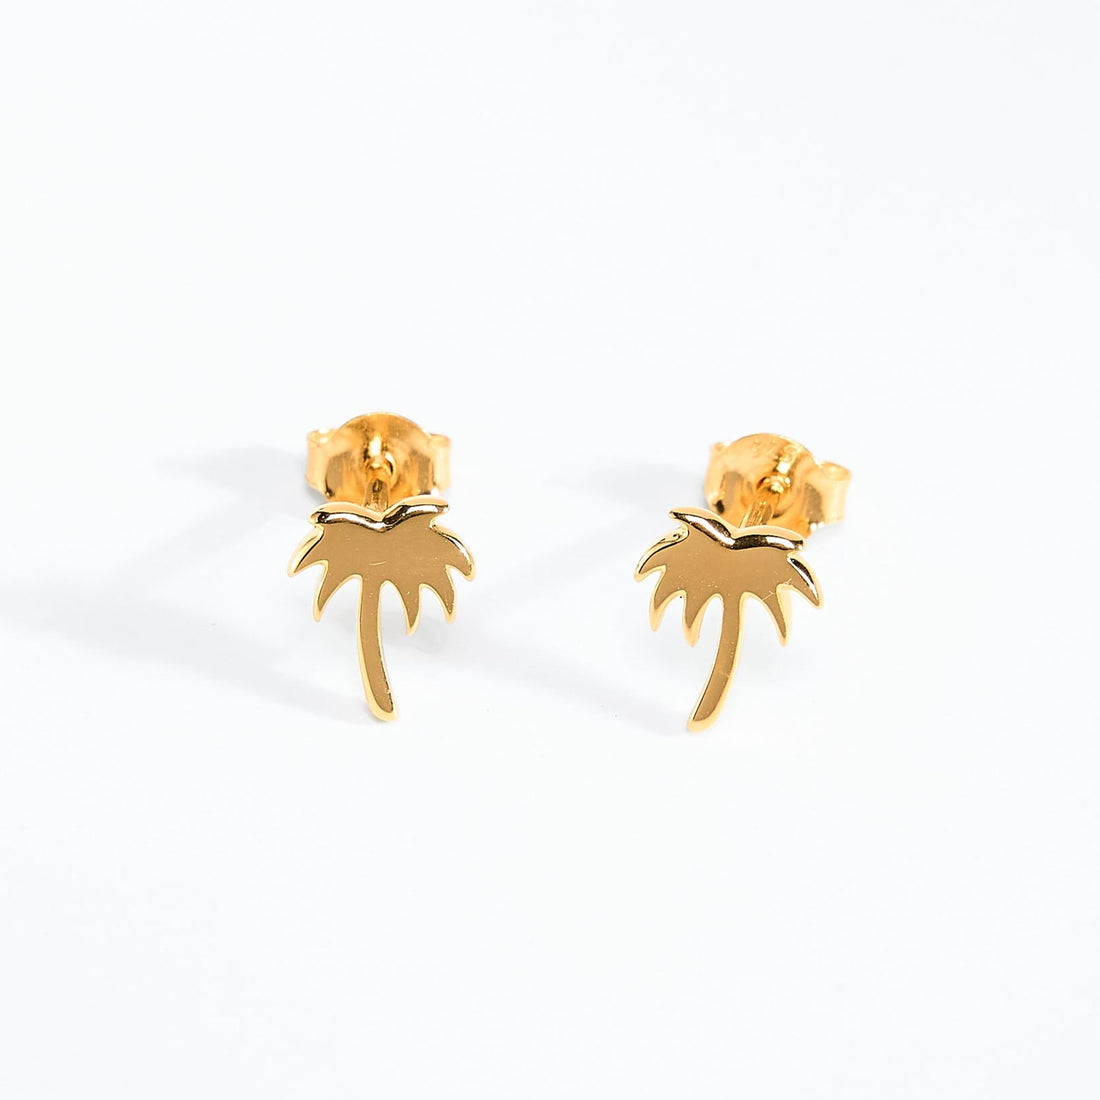 palm studs earrings gold vermeil plated 18k whatnotz.com 